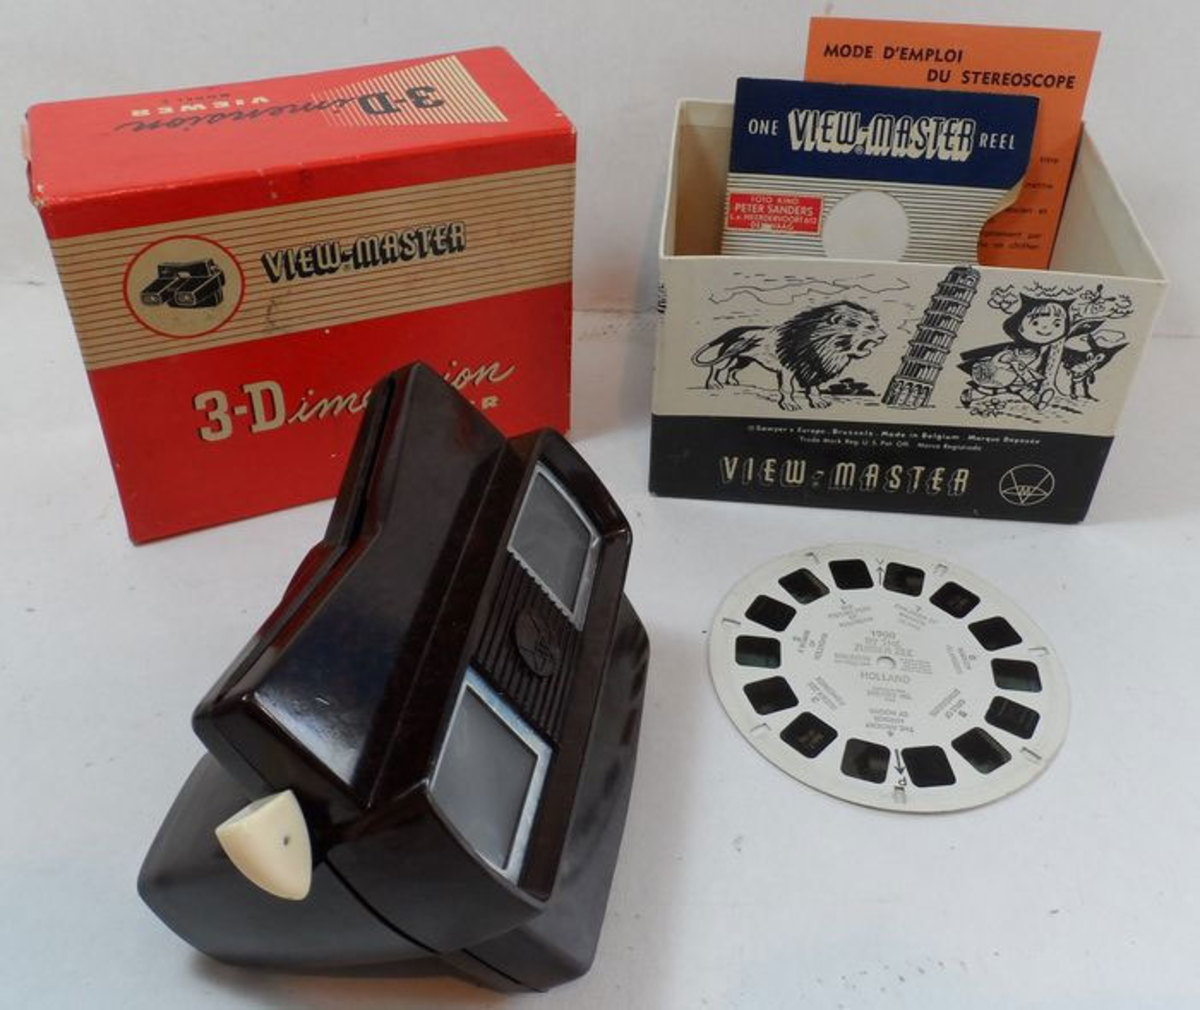 View-Master Reel - vintage - Viewmaster - Phone Case